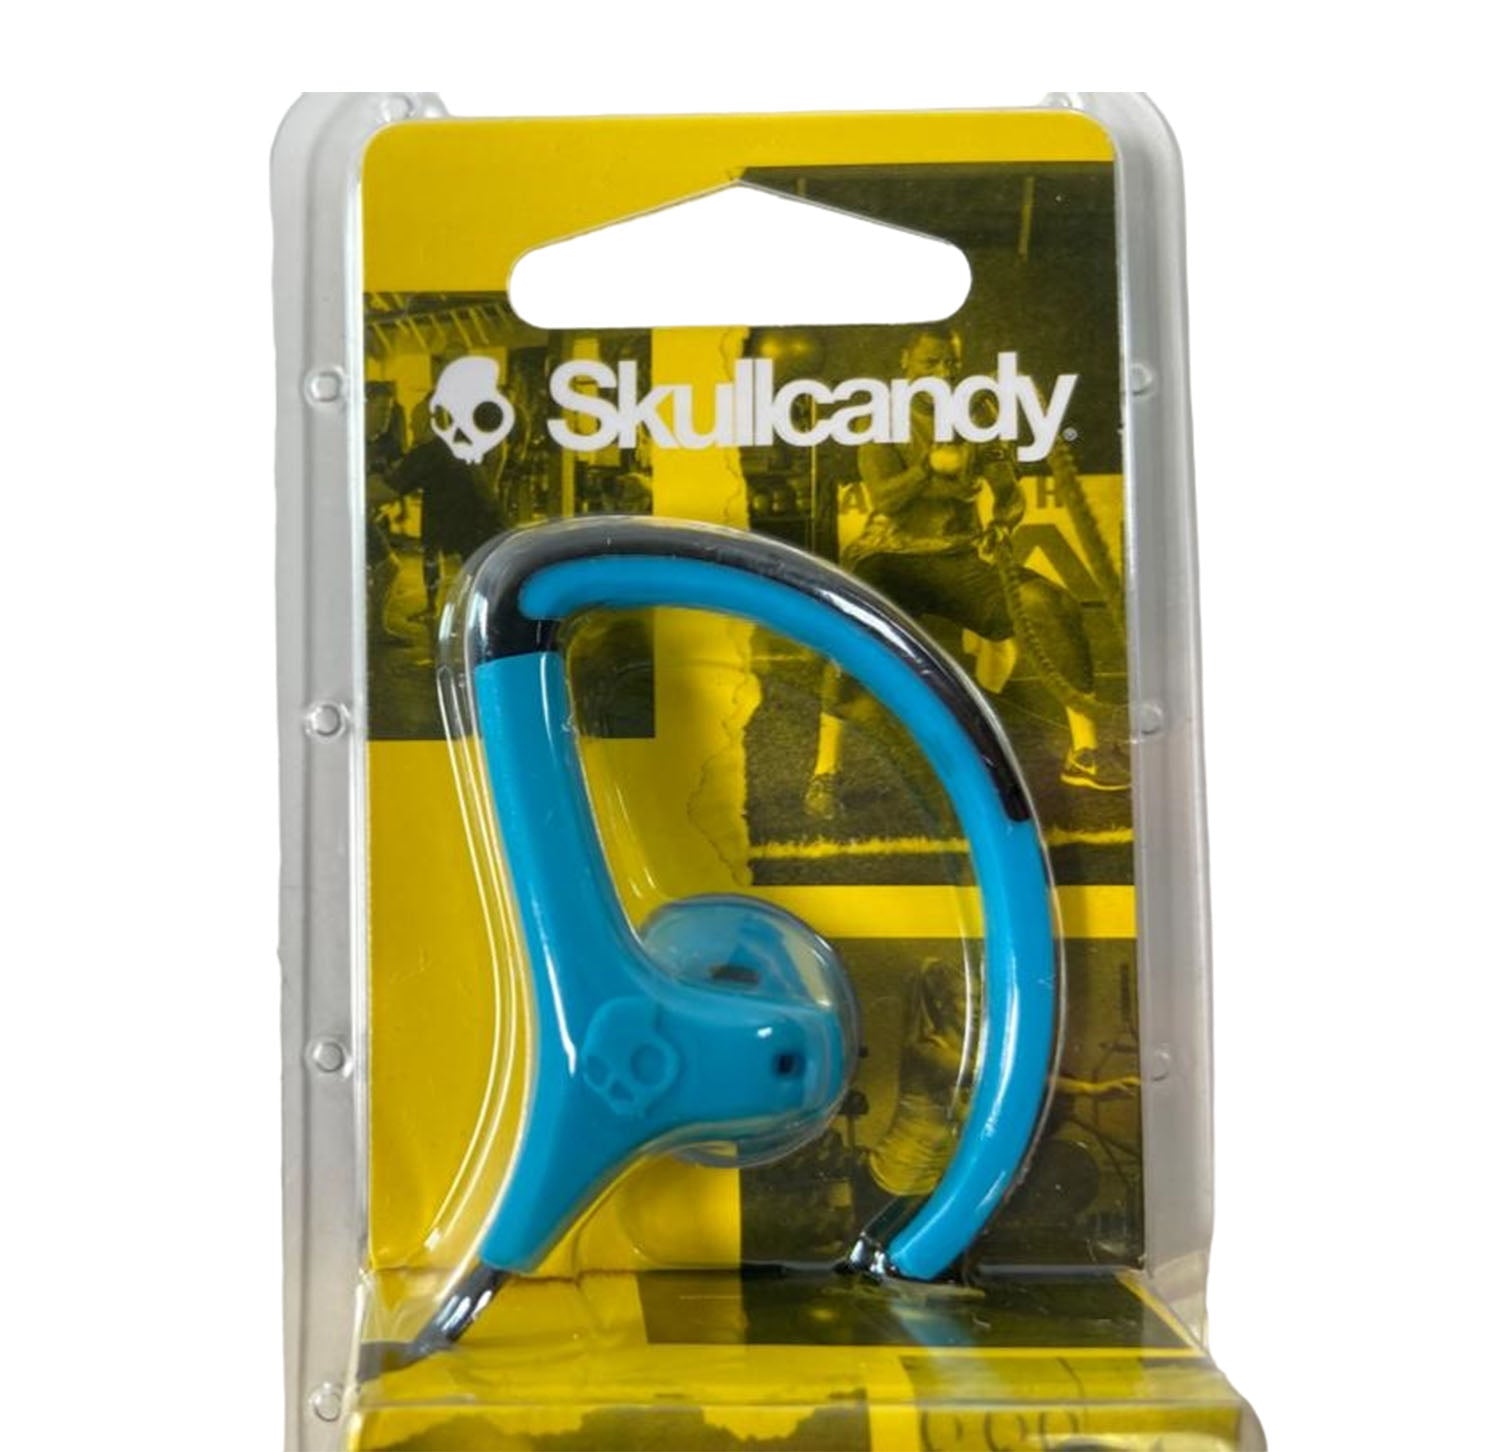 Skullcandy S4CHDY-132 Chops Hanger Bud In-Ear Sports Headphones - Hot Blue - Hollywood DJ